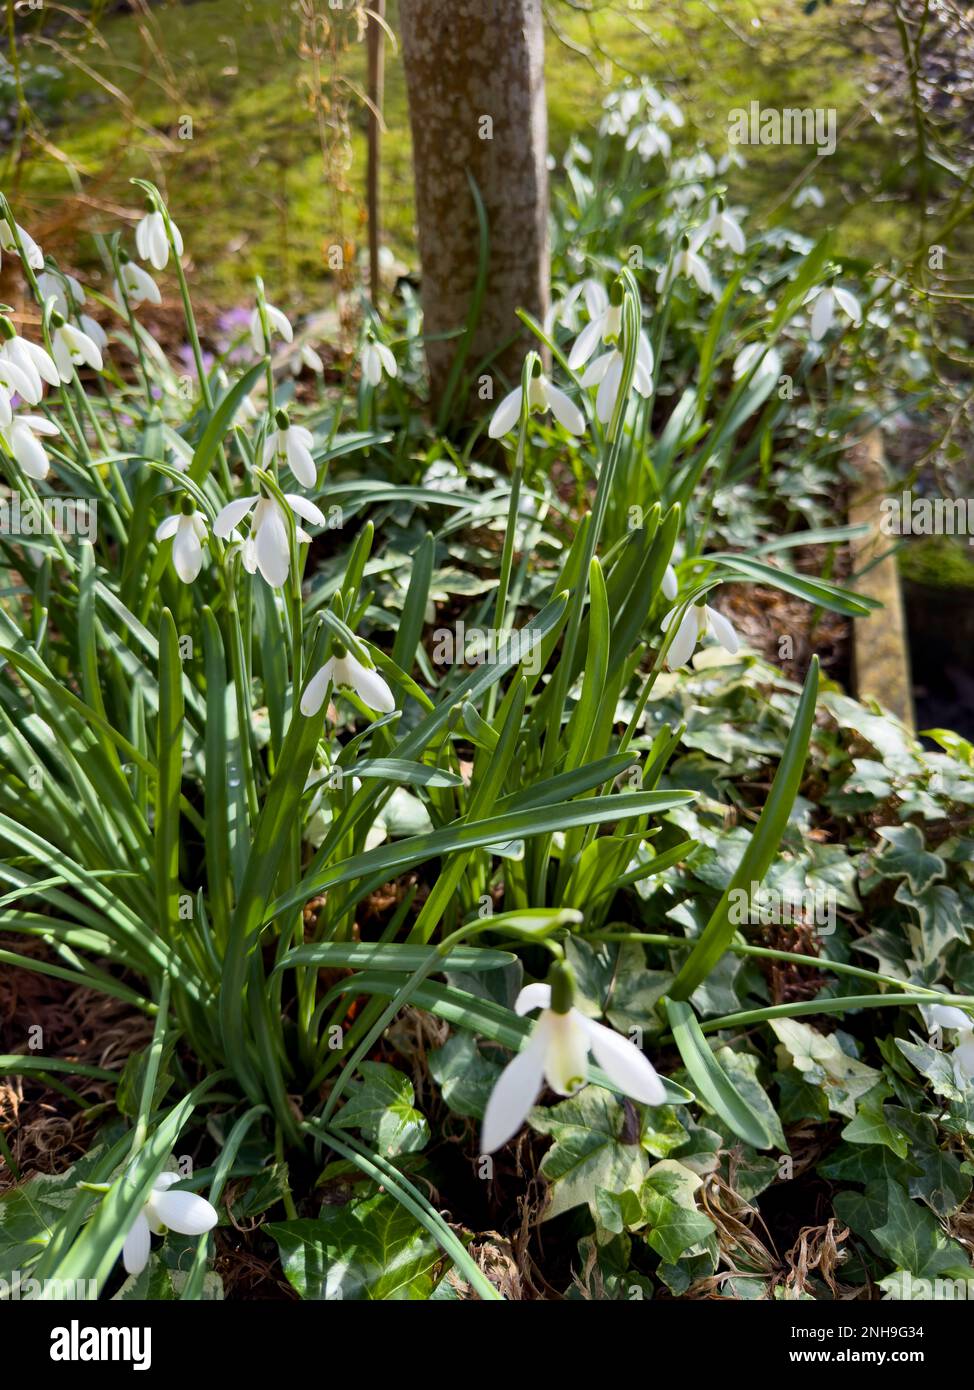 Snowdrops in a garden setting Stock Photo